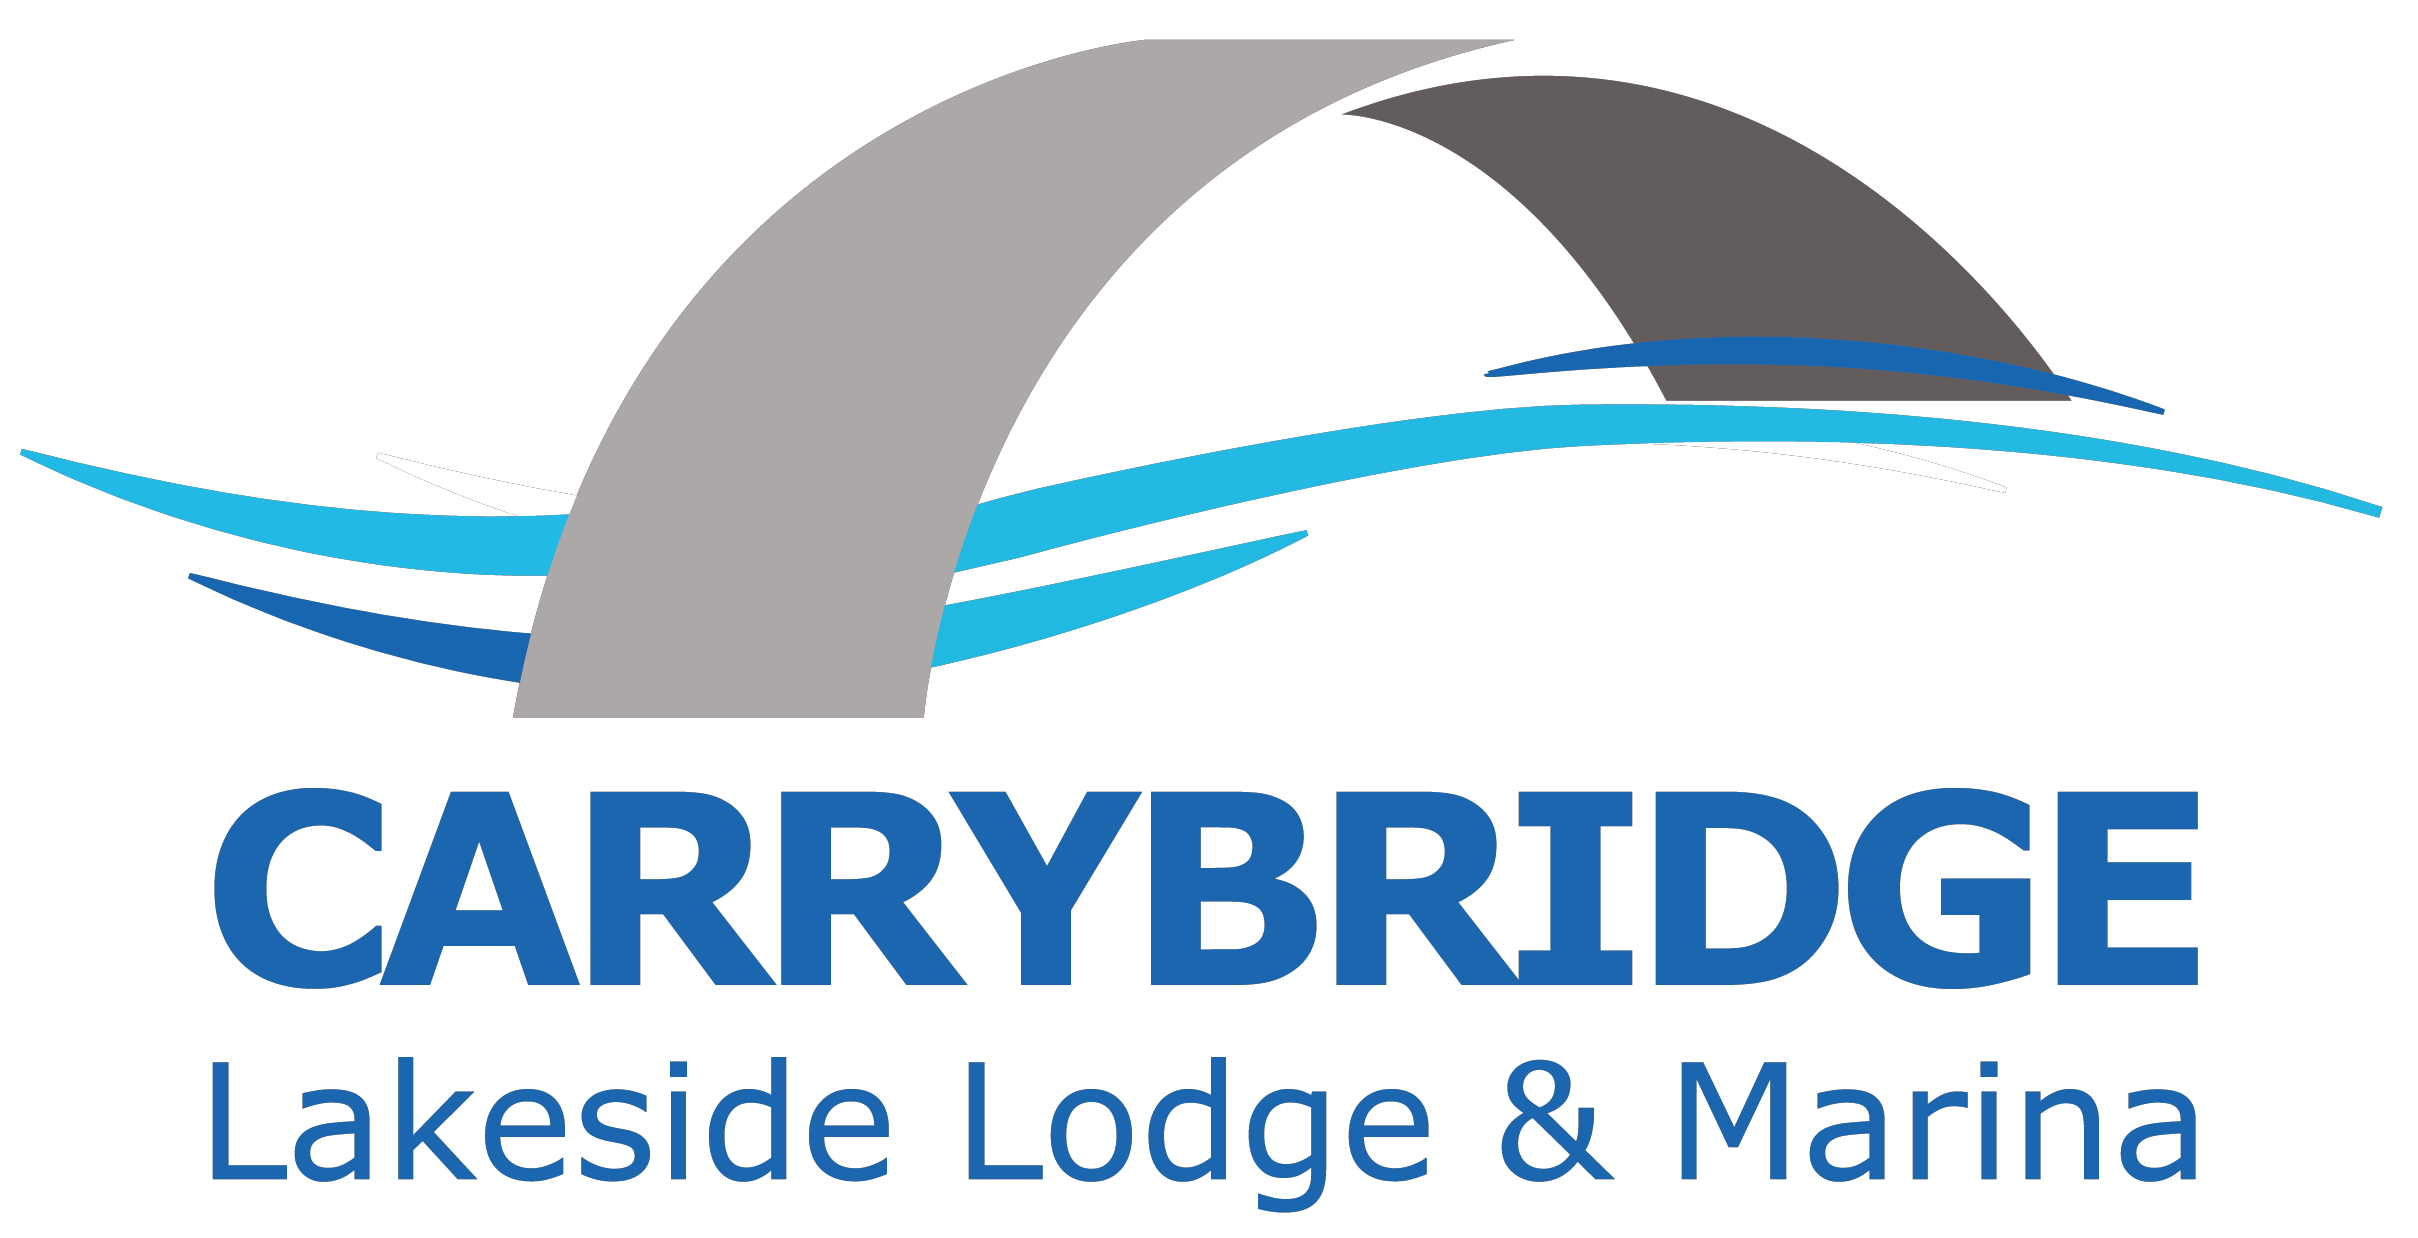 Carrybridge Lakeside Lodge